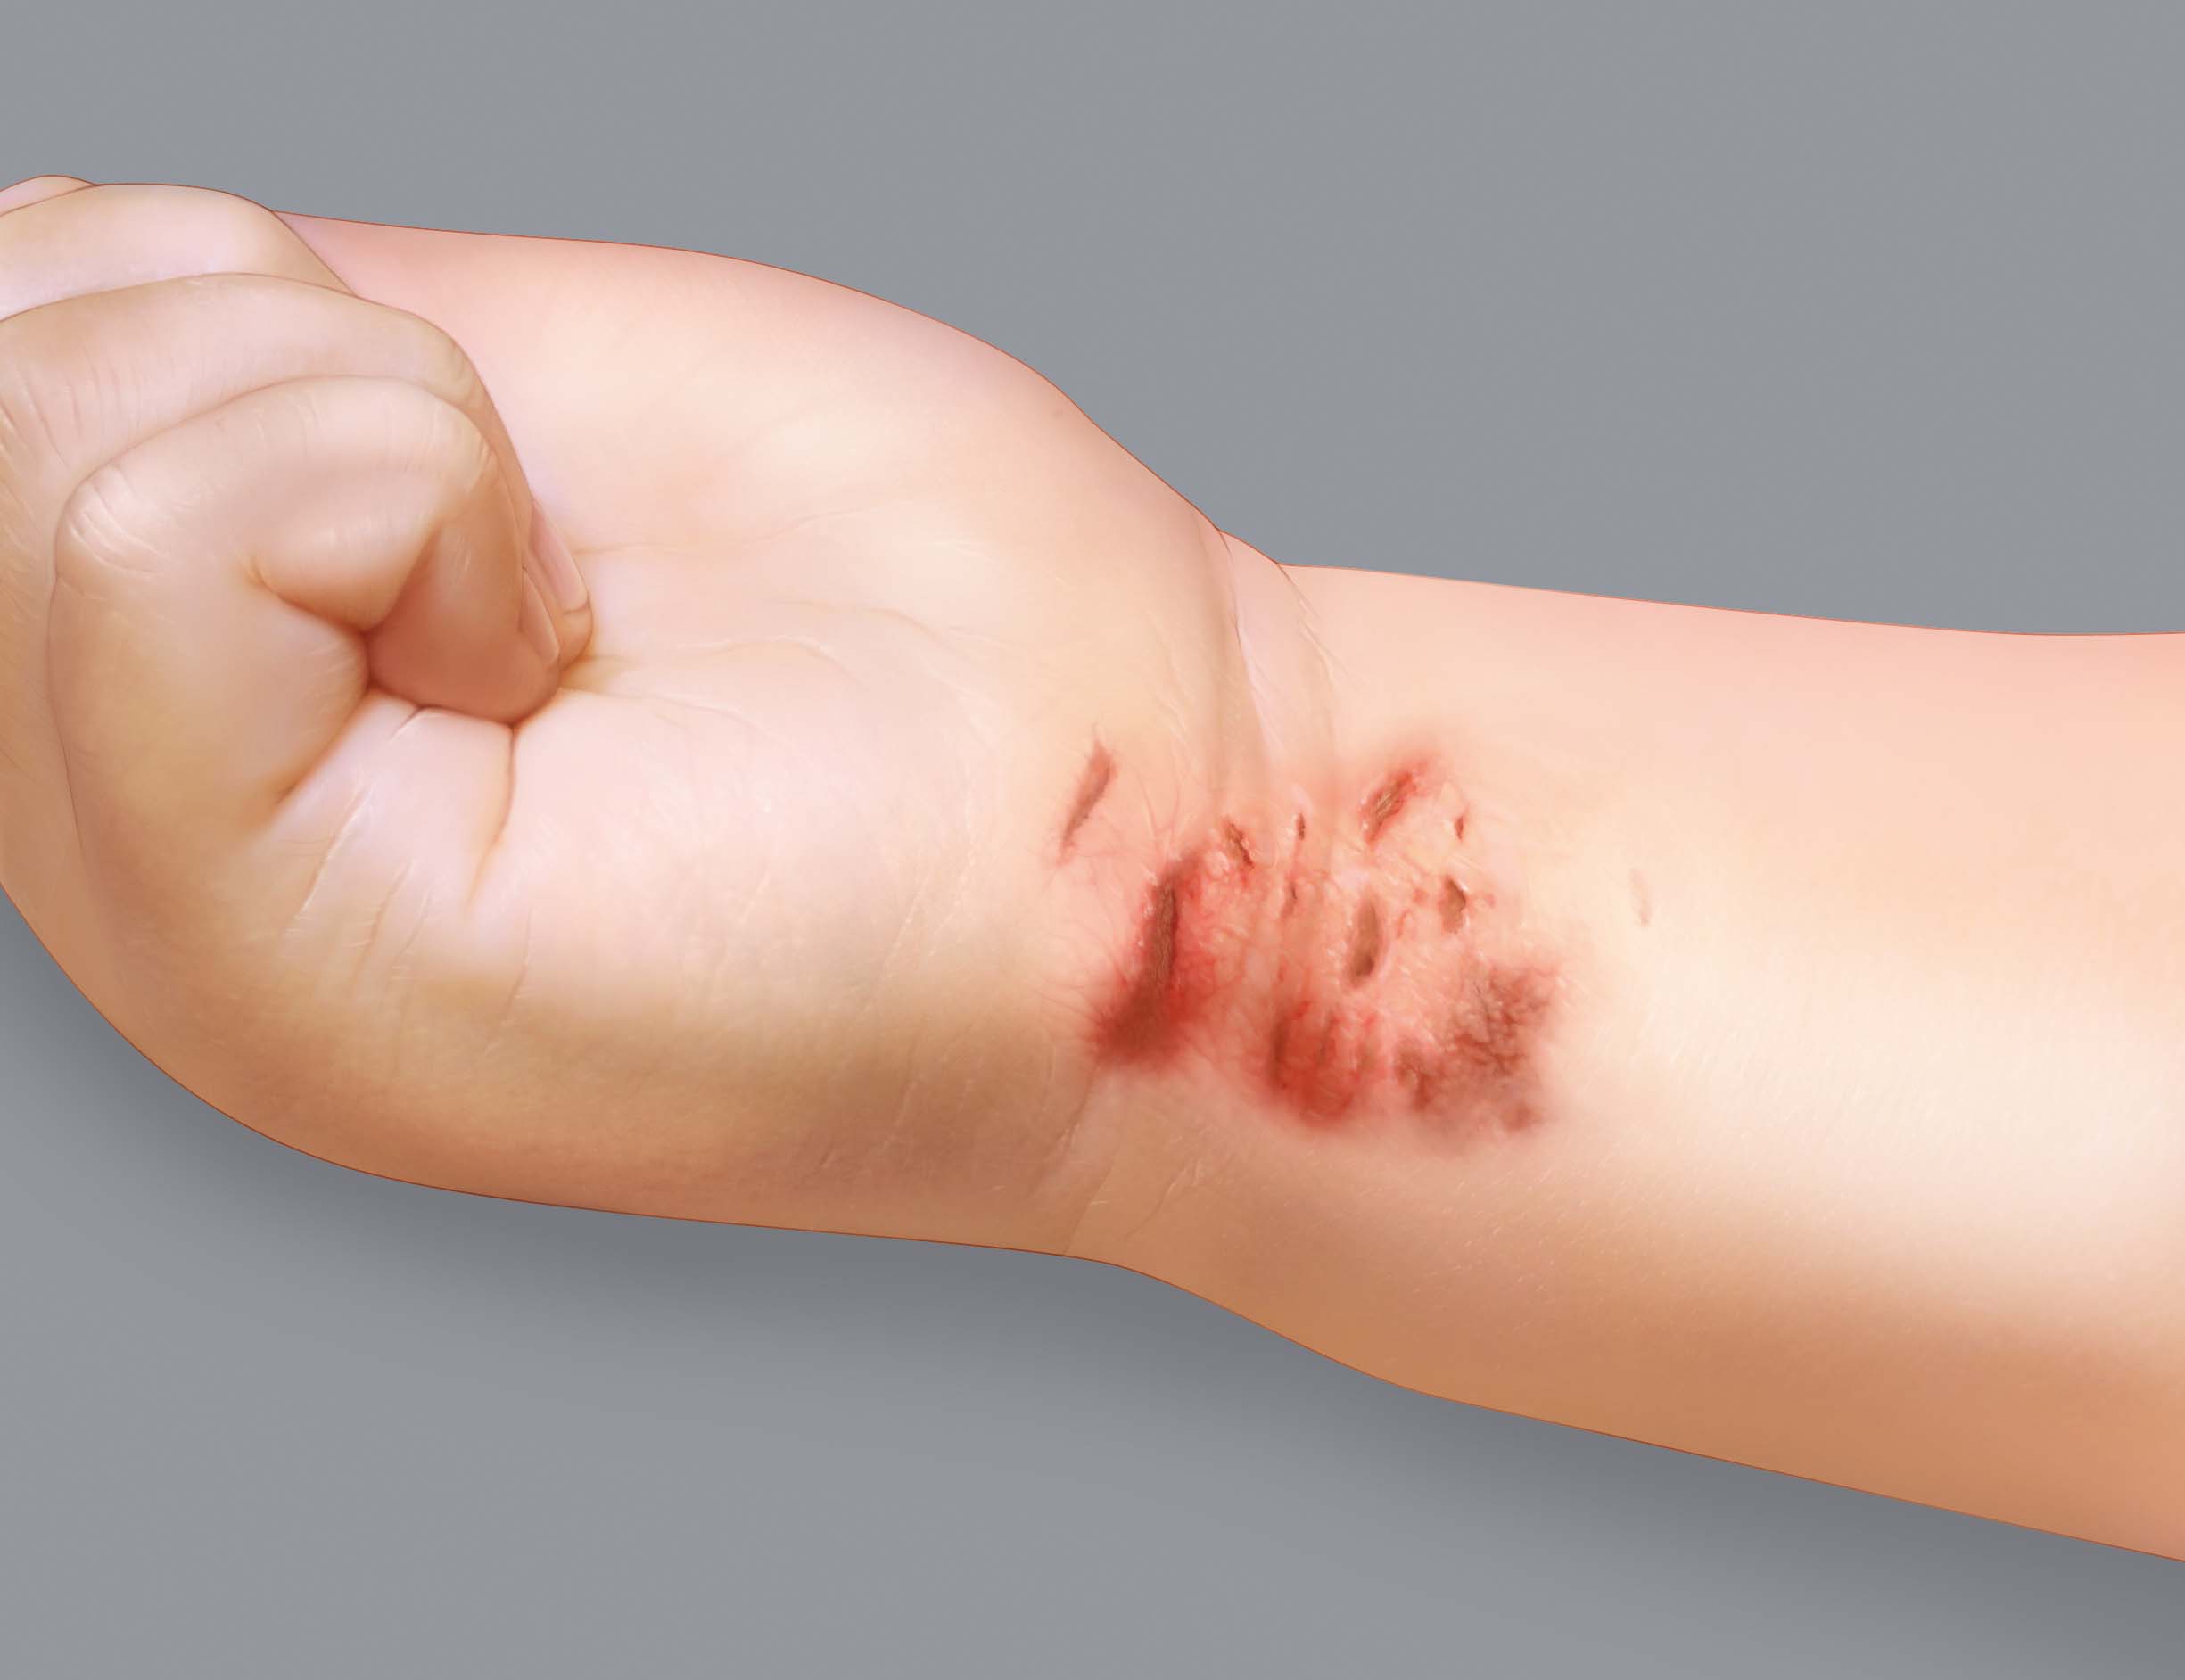 Síntomas del eczema atópico: lesiones de rascado o excoriación